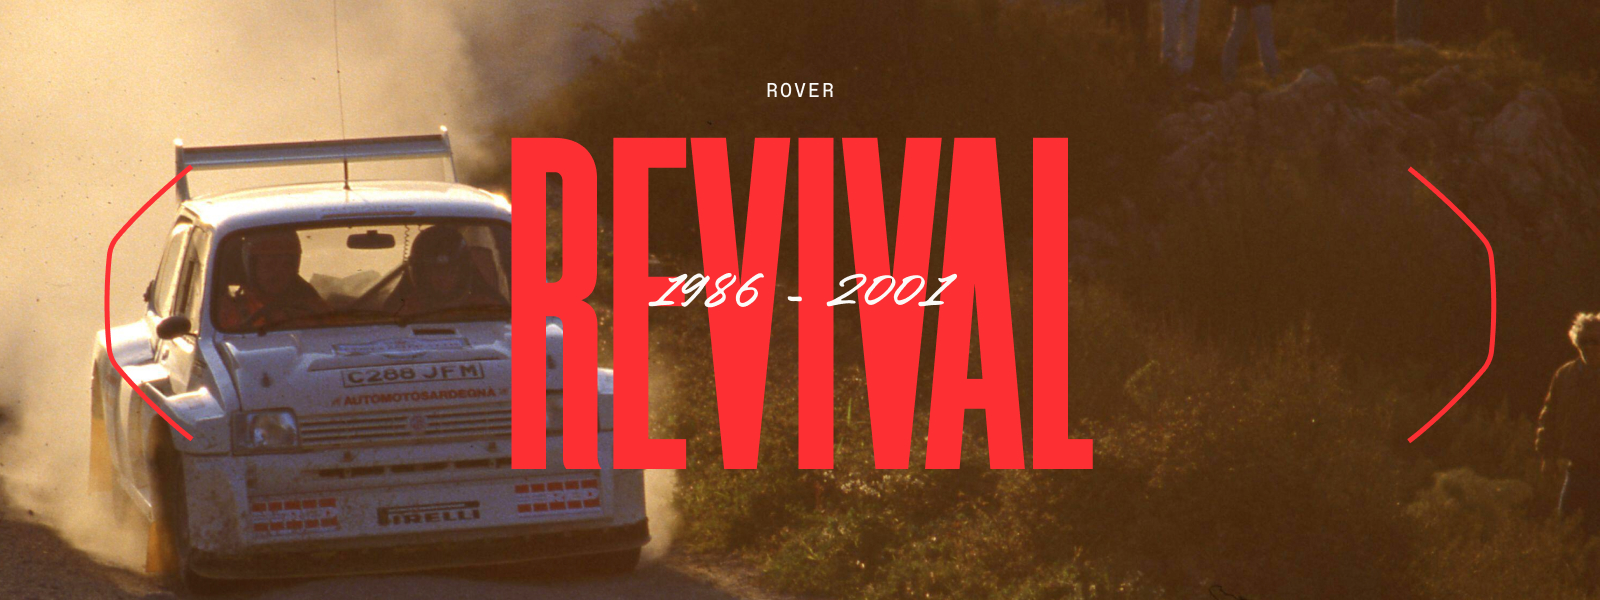 Rover Revival